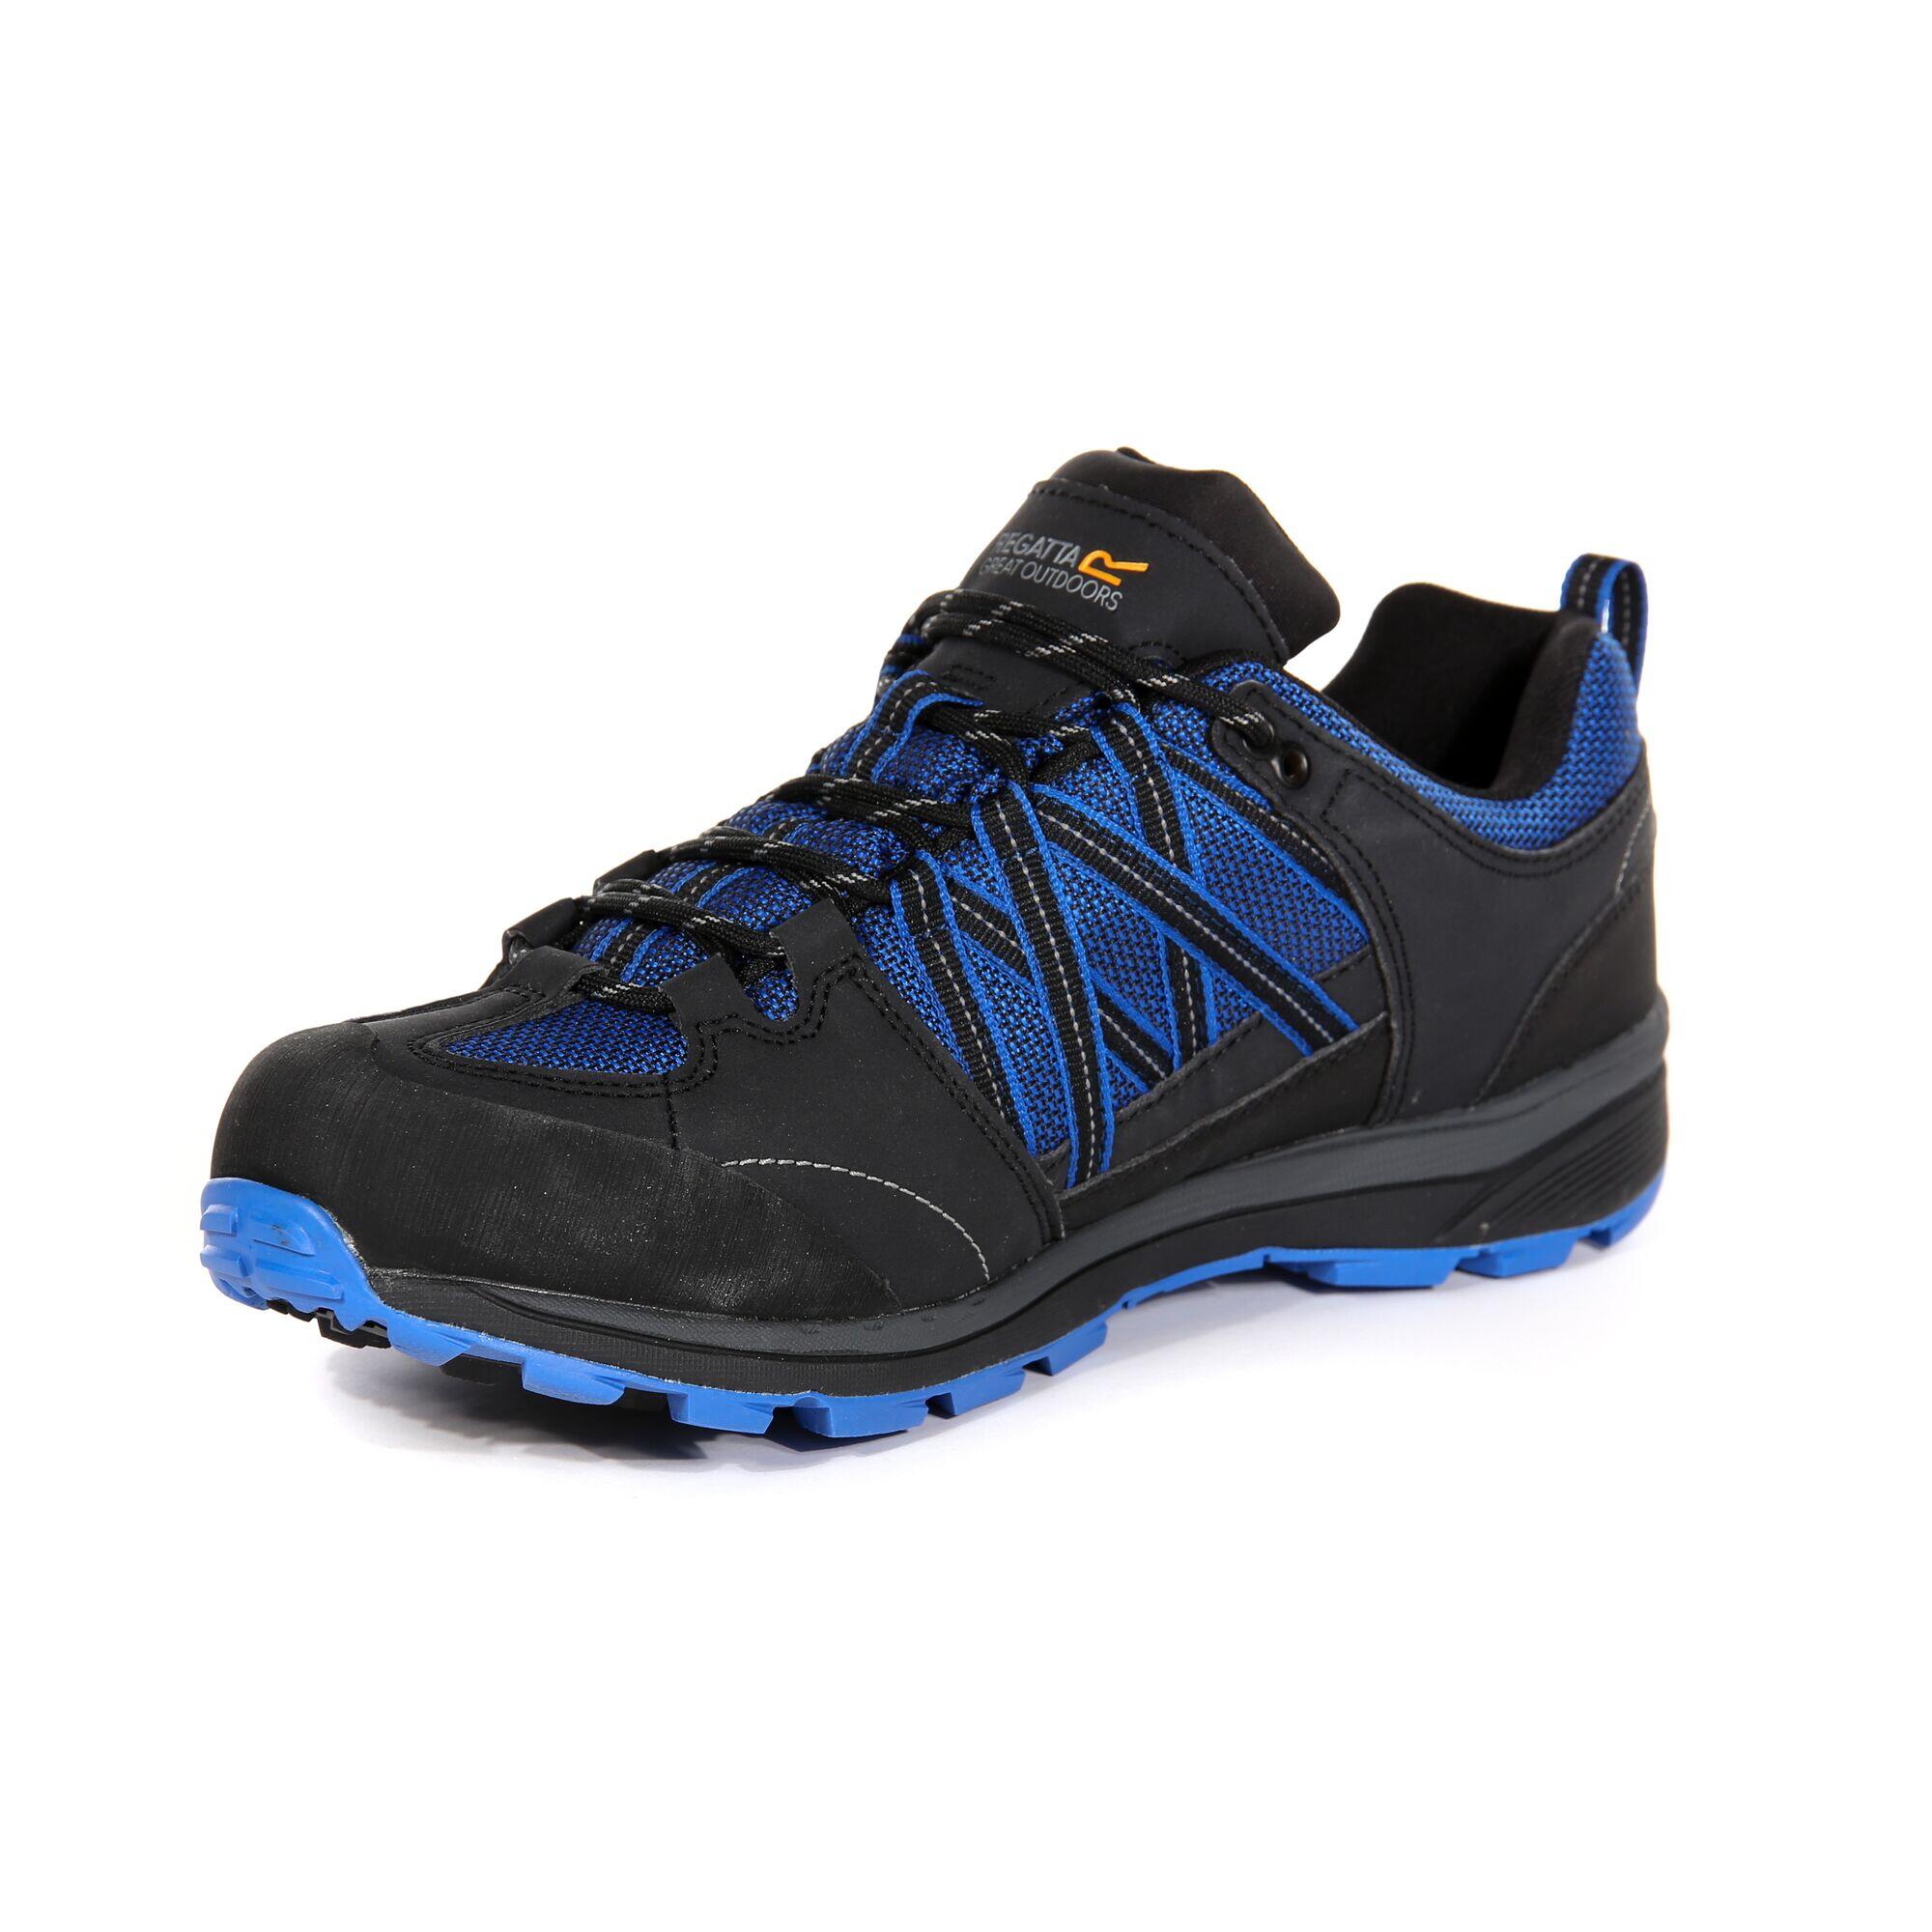 Samaris II Men's Hiking Shoes - Mid Blue/Ash 4/6